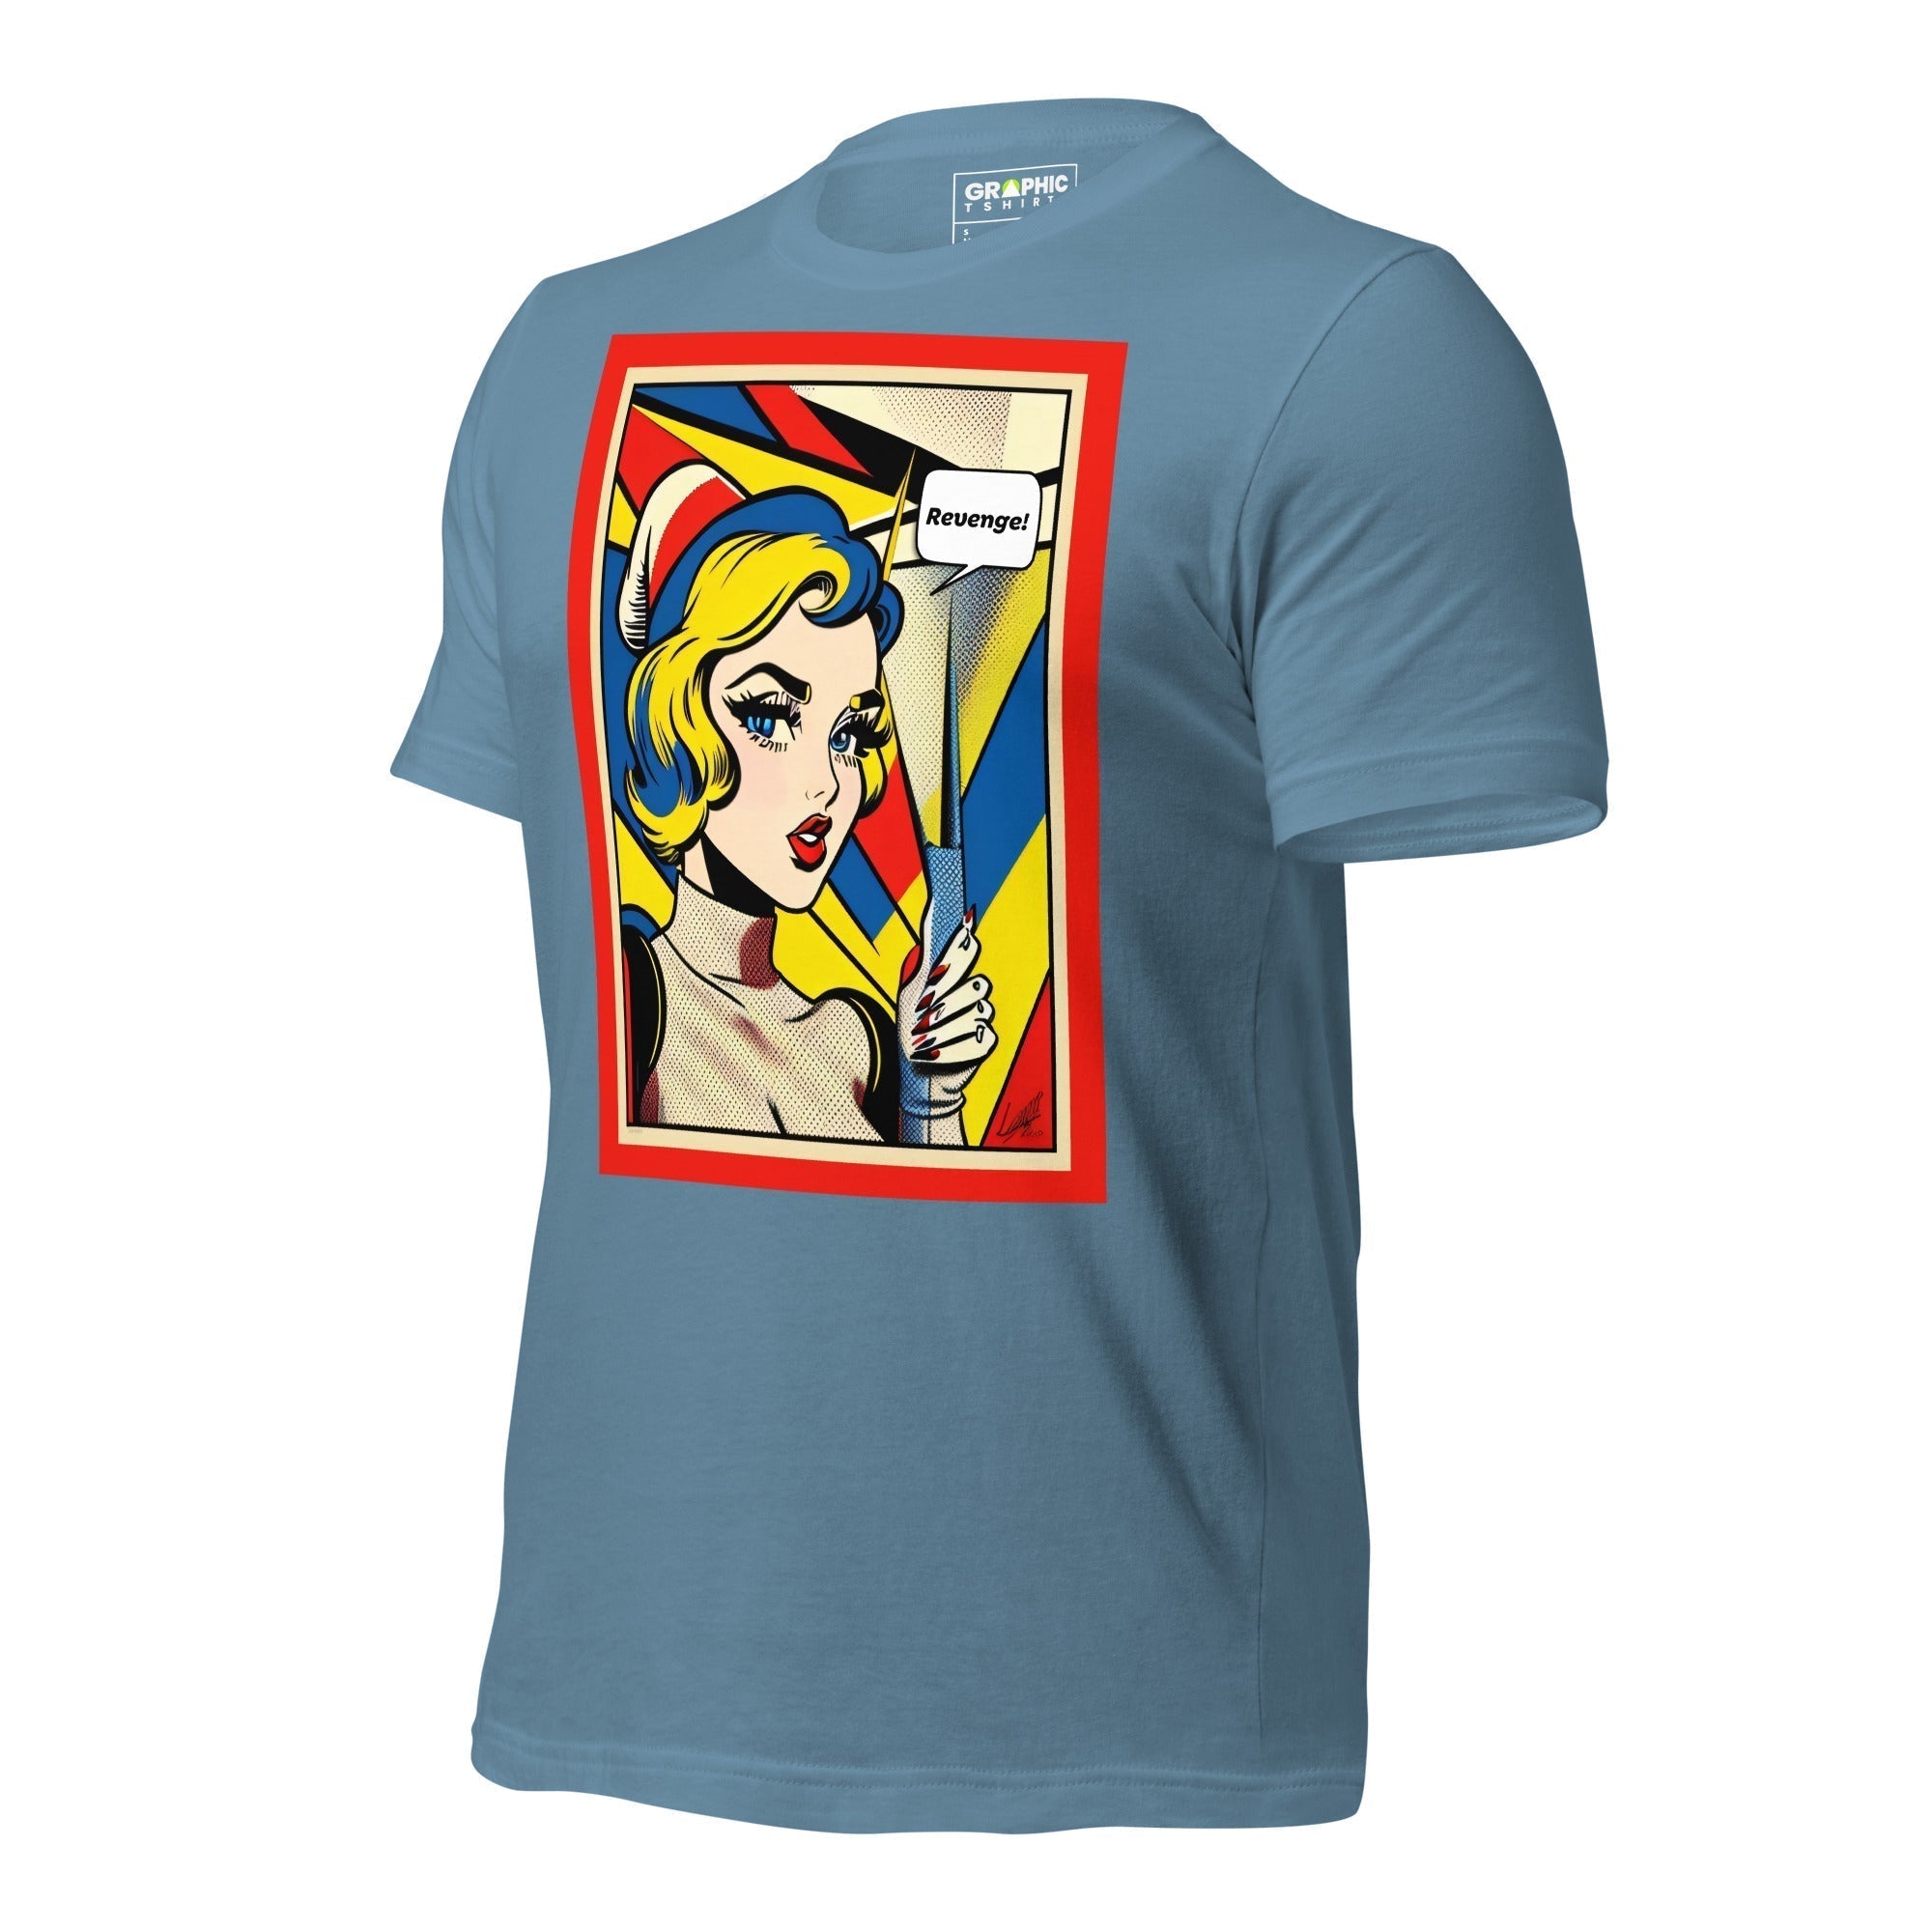 Unisex Crew Neck T-Shirt - Vintage American Comic Series v.9 - GRAPHIC T-SHIRTS